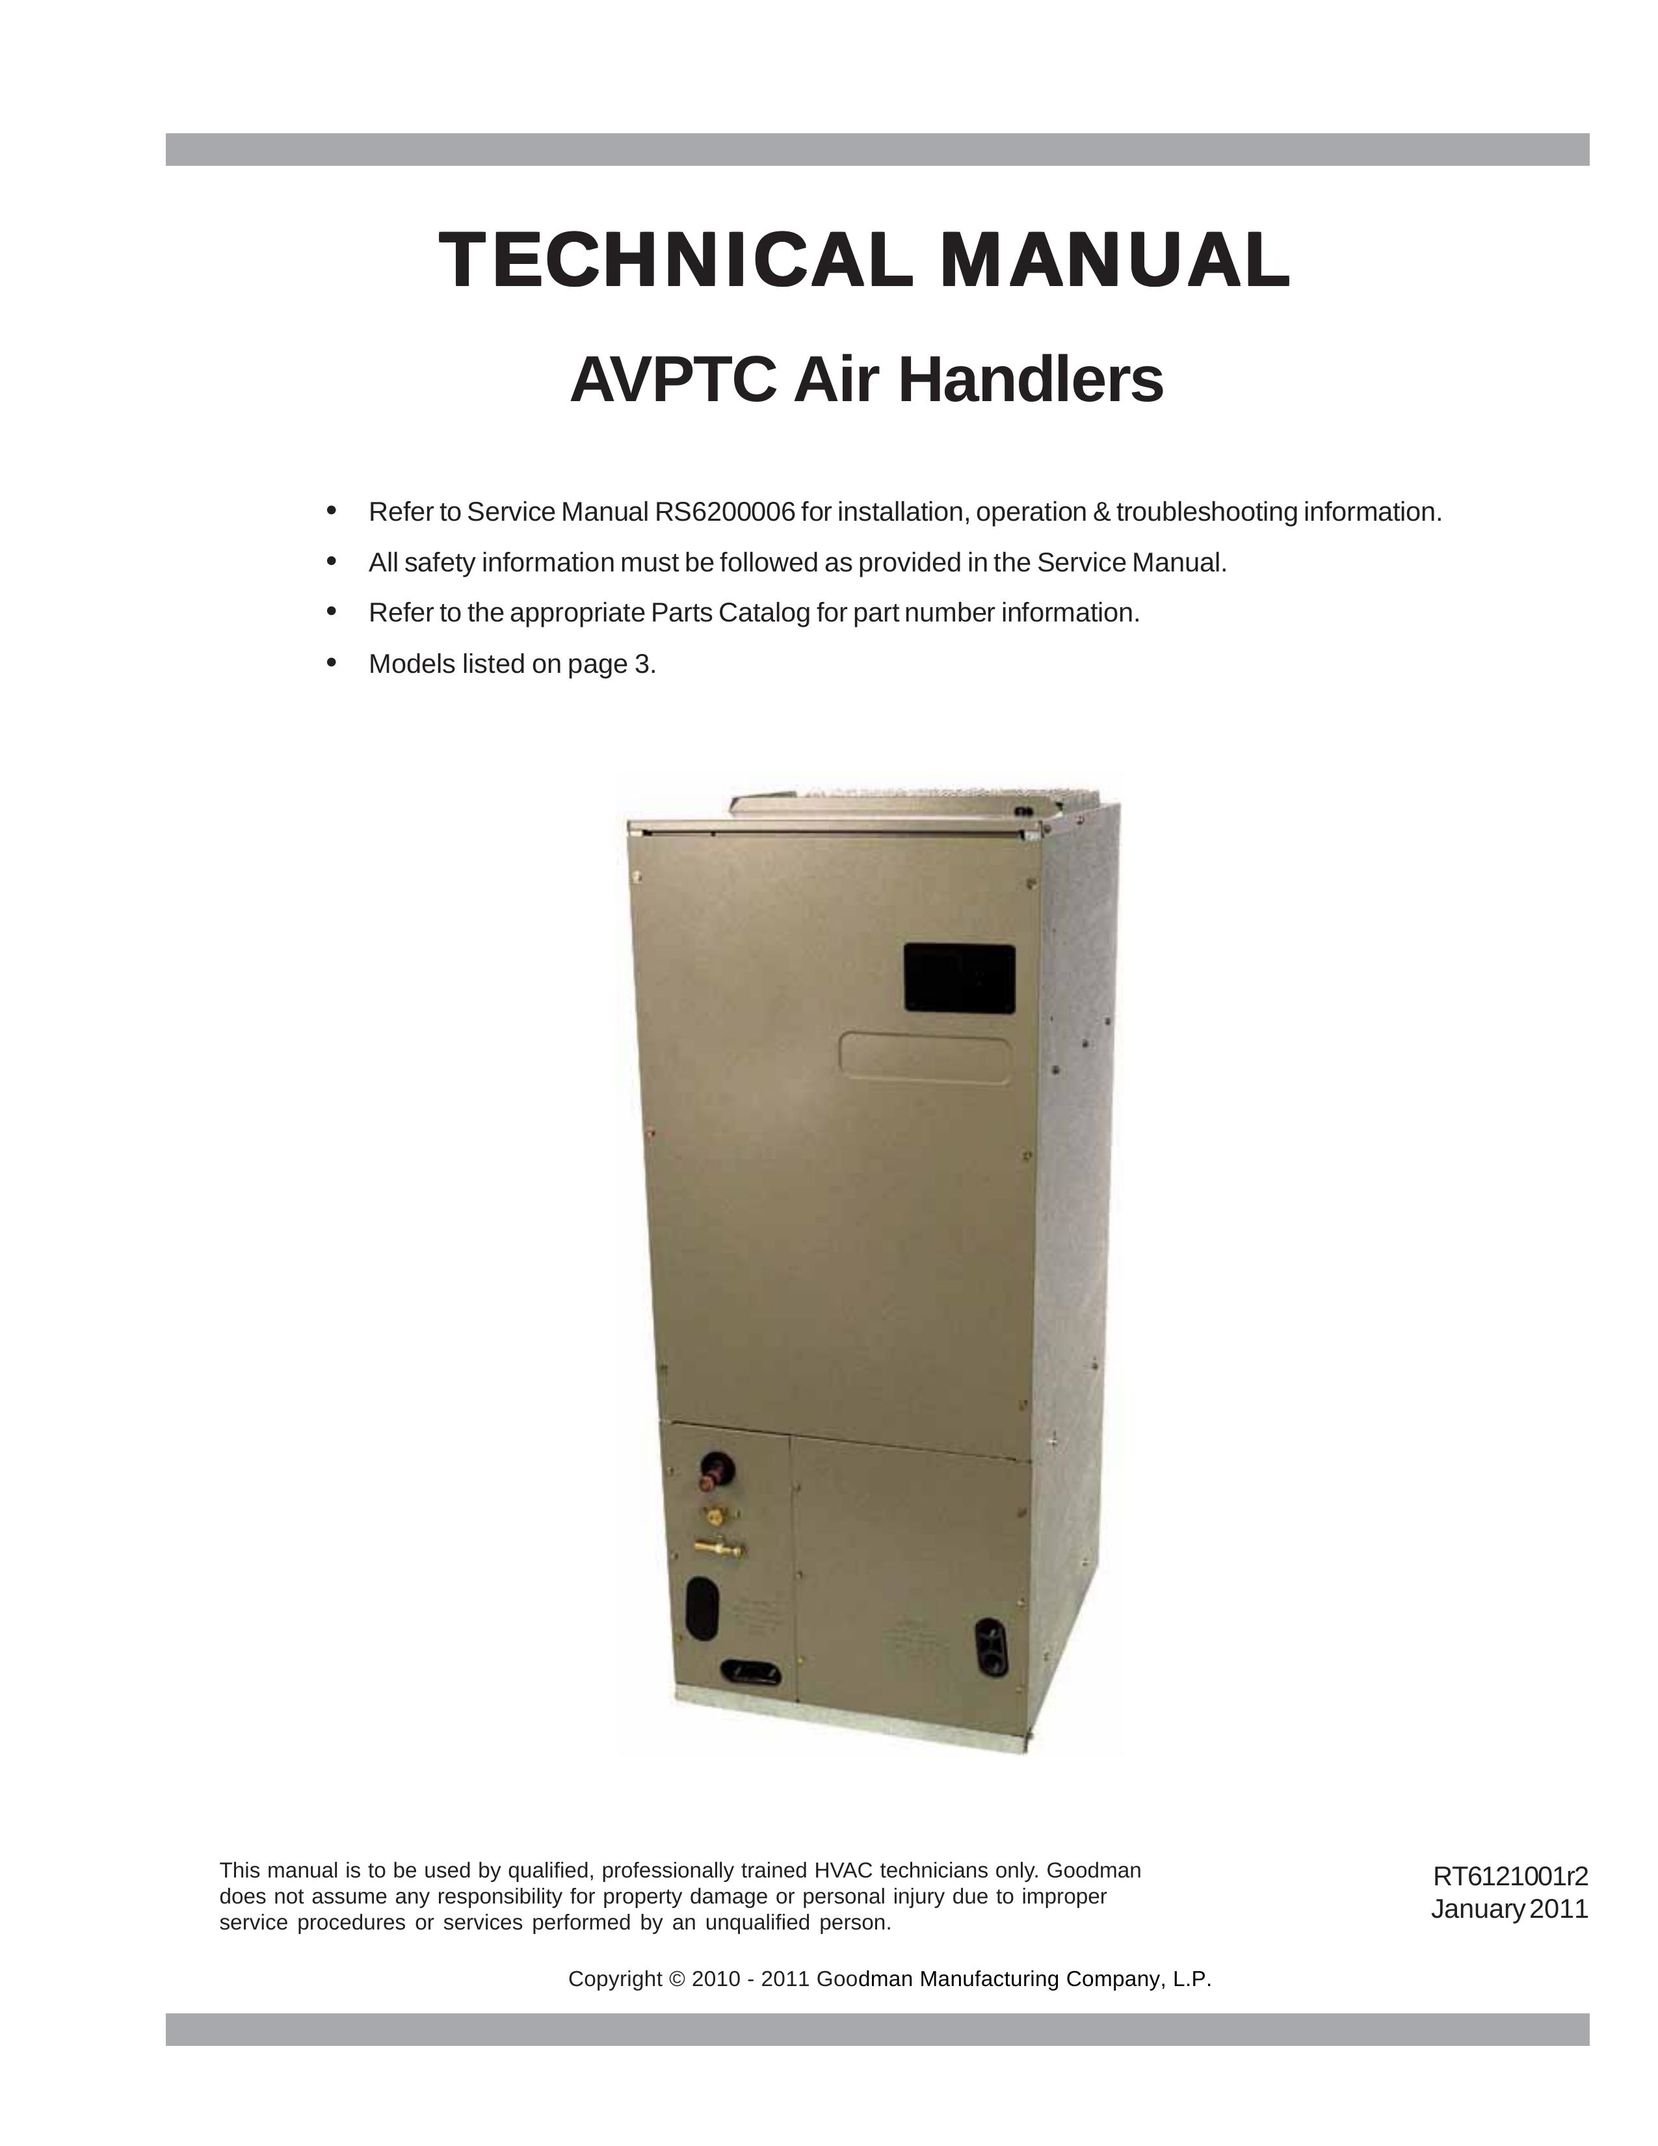 Goodman Mfg AVPTC313714 Air Conditioner User Manual